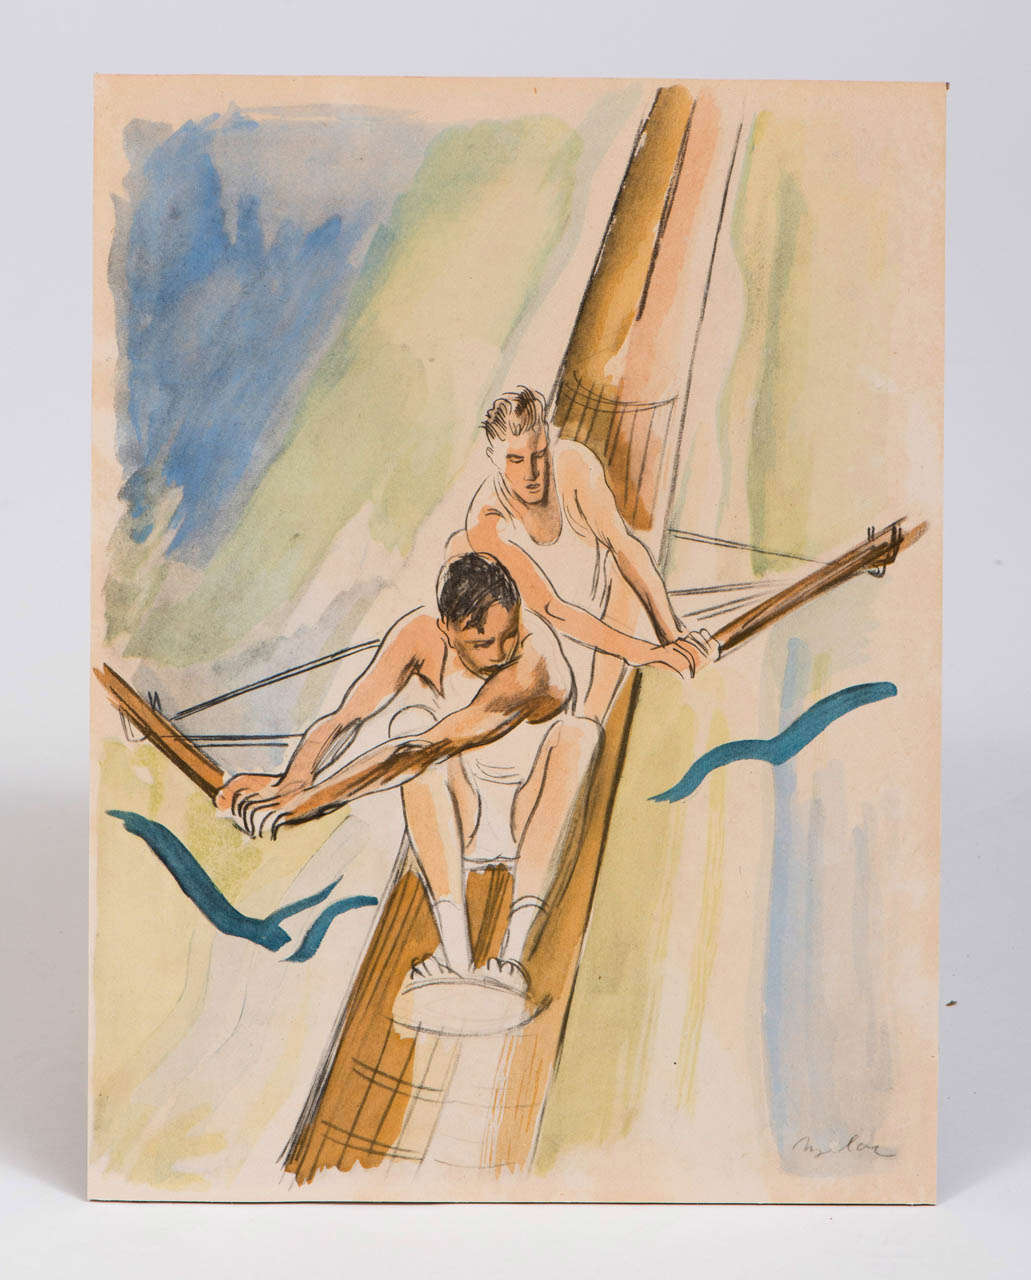 Milivoy Uzelac (1897-1950)
“Les Joies du Sport”, 1932
A group of seven watercolours/prints.
Charcoal, pencil, watercolour and gouache in pochoir technique print.
Limited edition of 750.
Framed.
Largest 33cms x 23cms.

Milivoy Uzelac was born